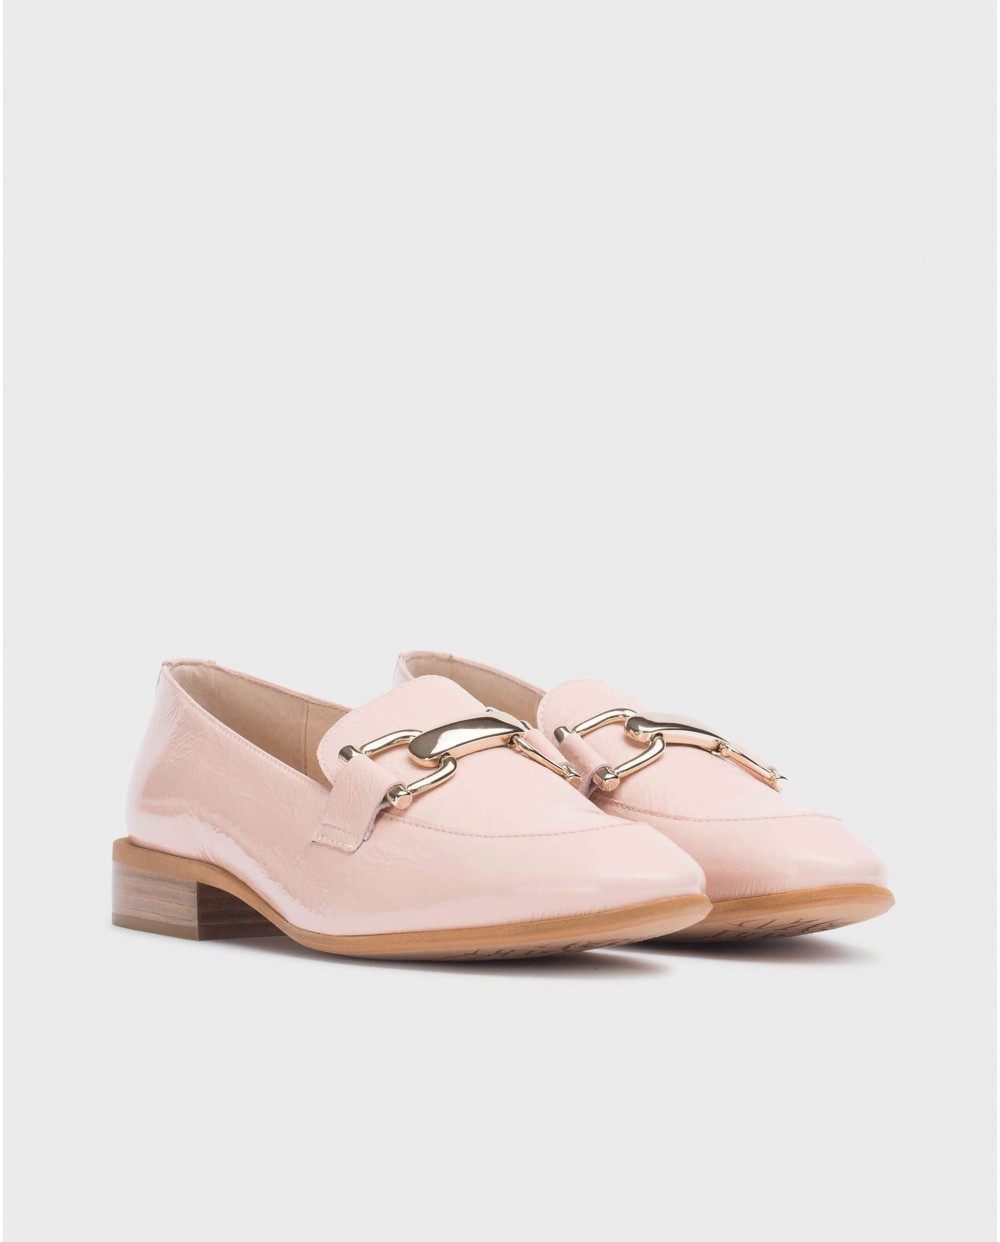 Wonders-Flat Shoes-Pink Ermes Moccasin